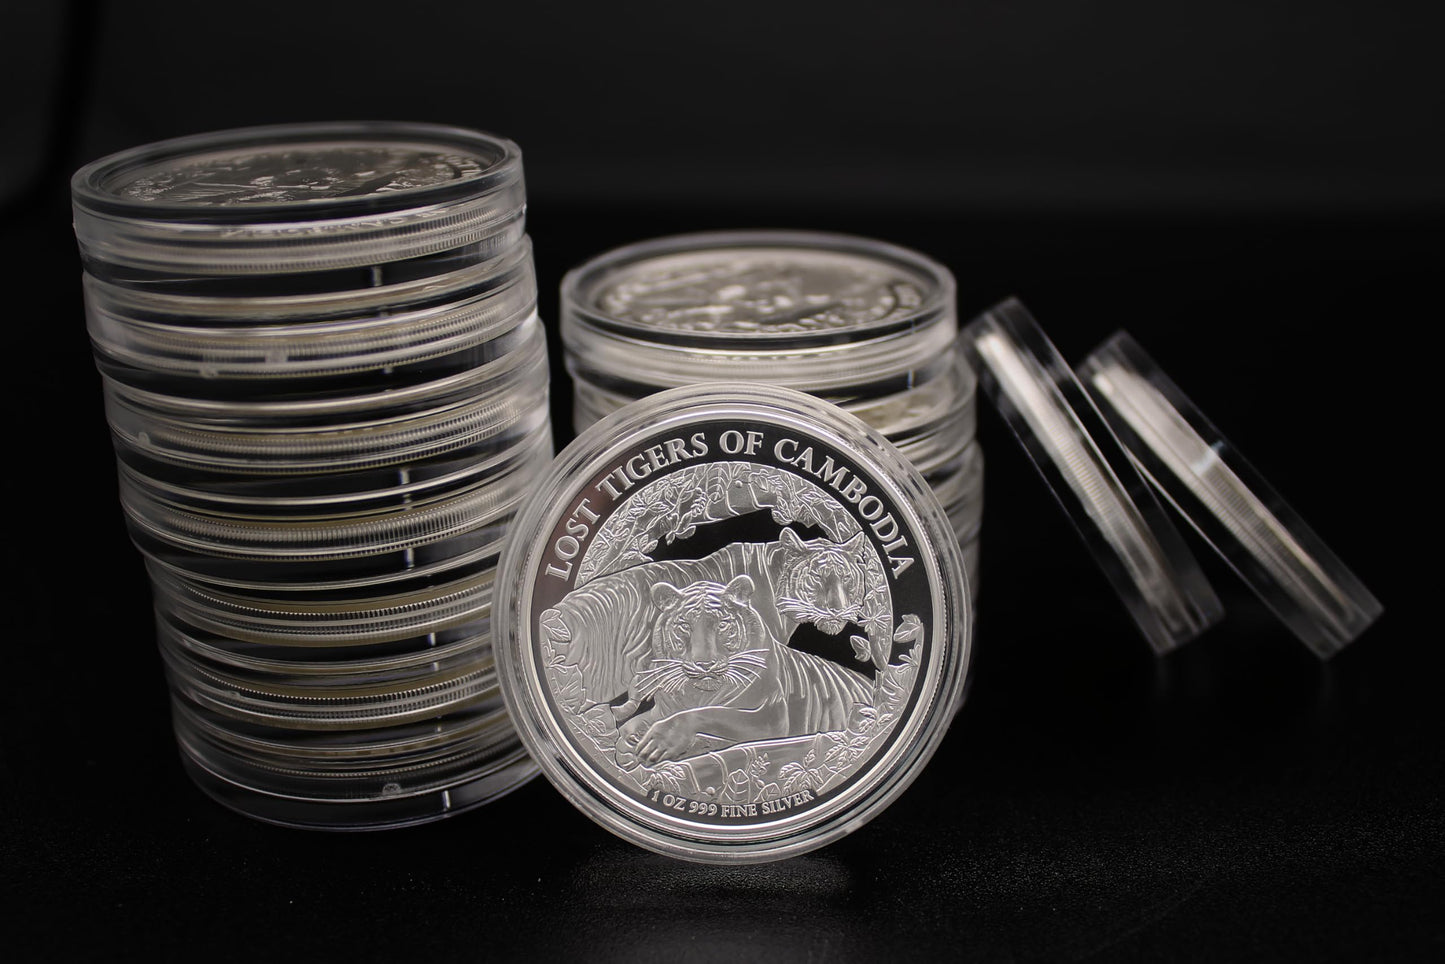 Exclusive 2024 Silver Lost Tigers of Cambodia Coin - Collectible Treasure with COA!”